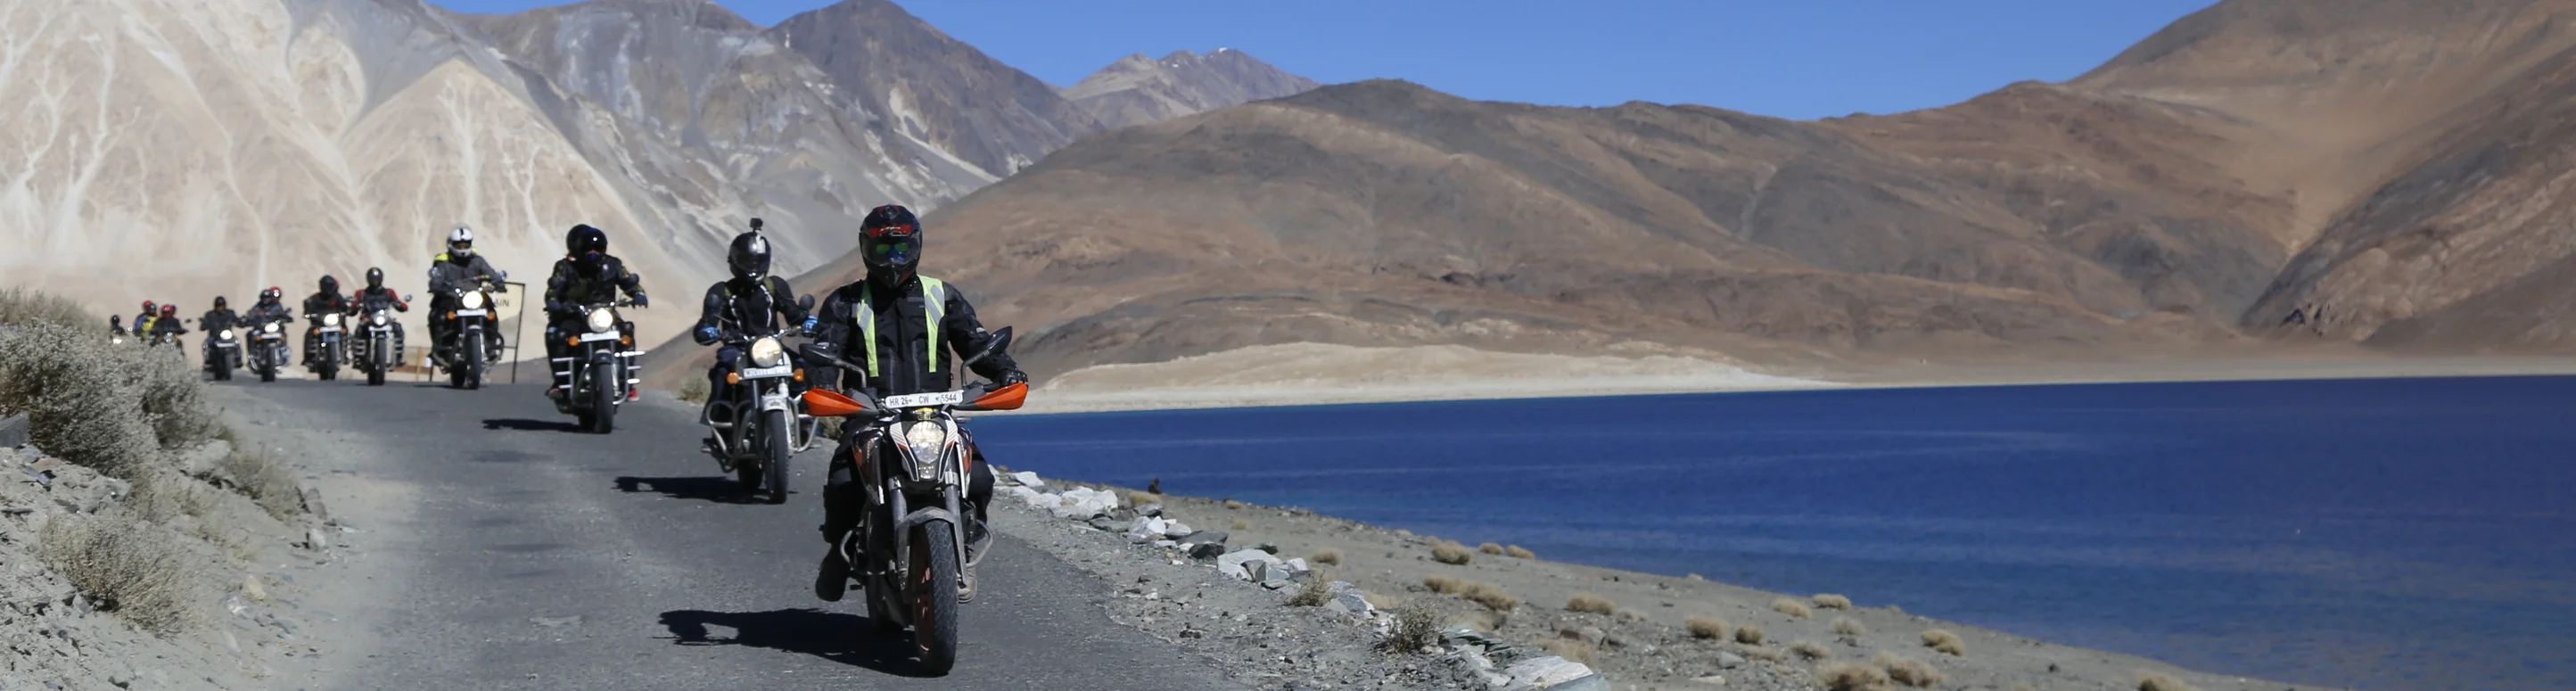 Leh Ladakh Reality check Dangers and adventure